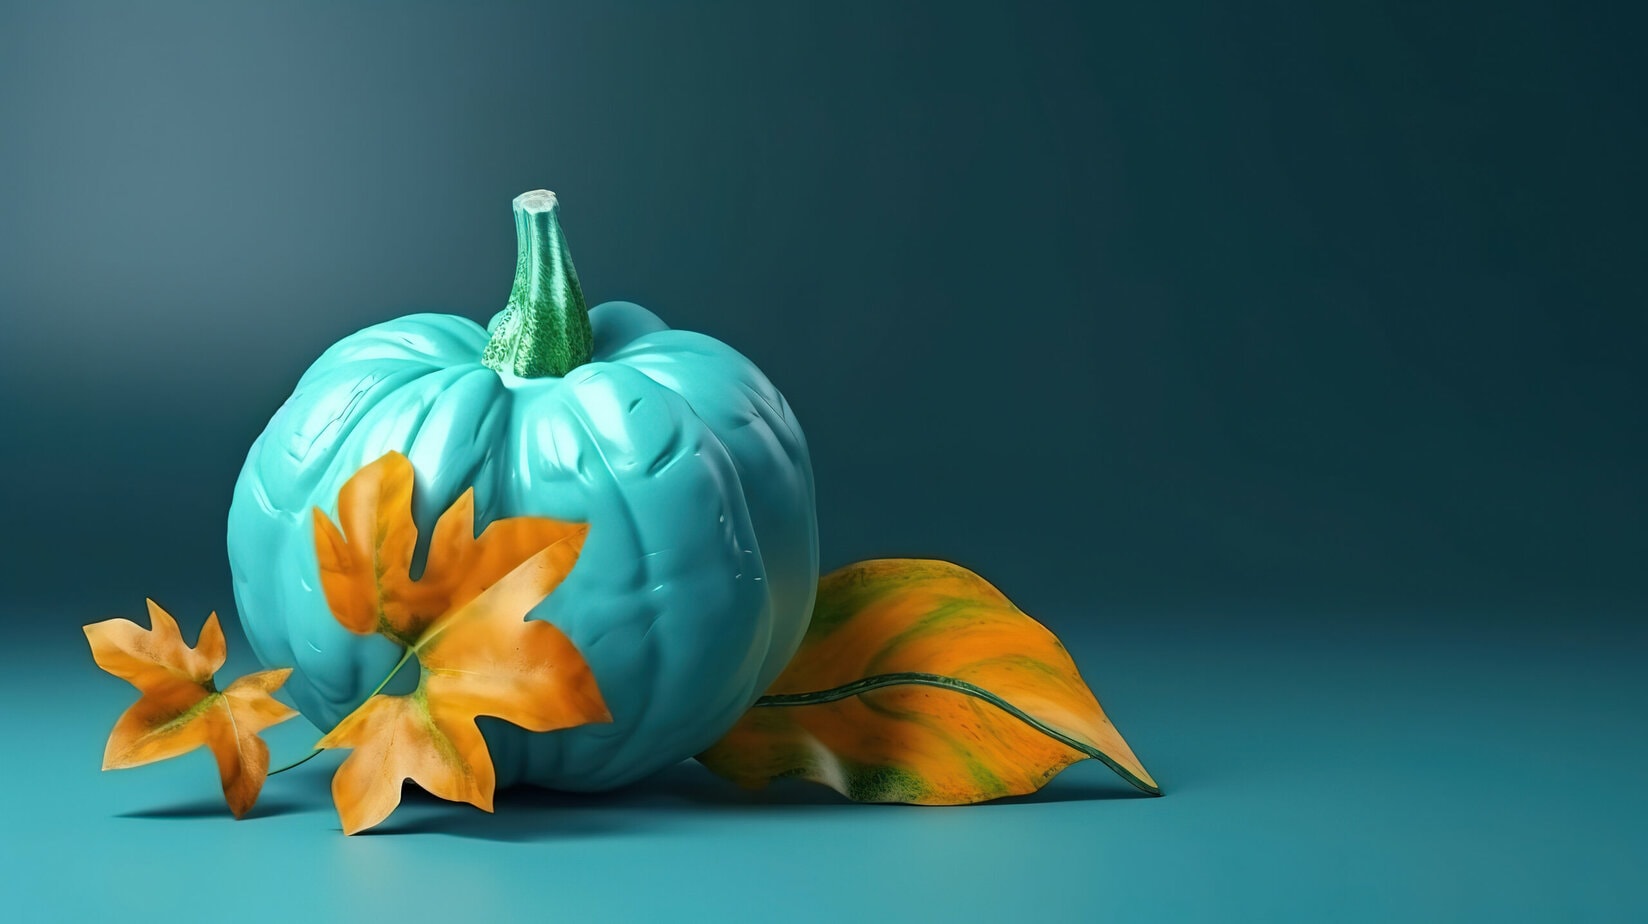 Pumpkin for Halloween on empty blue minimal background